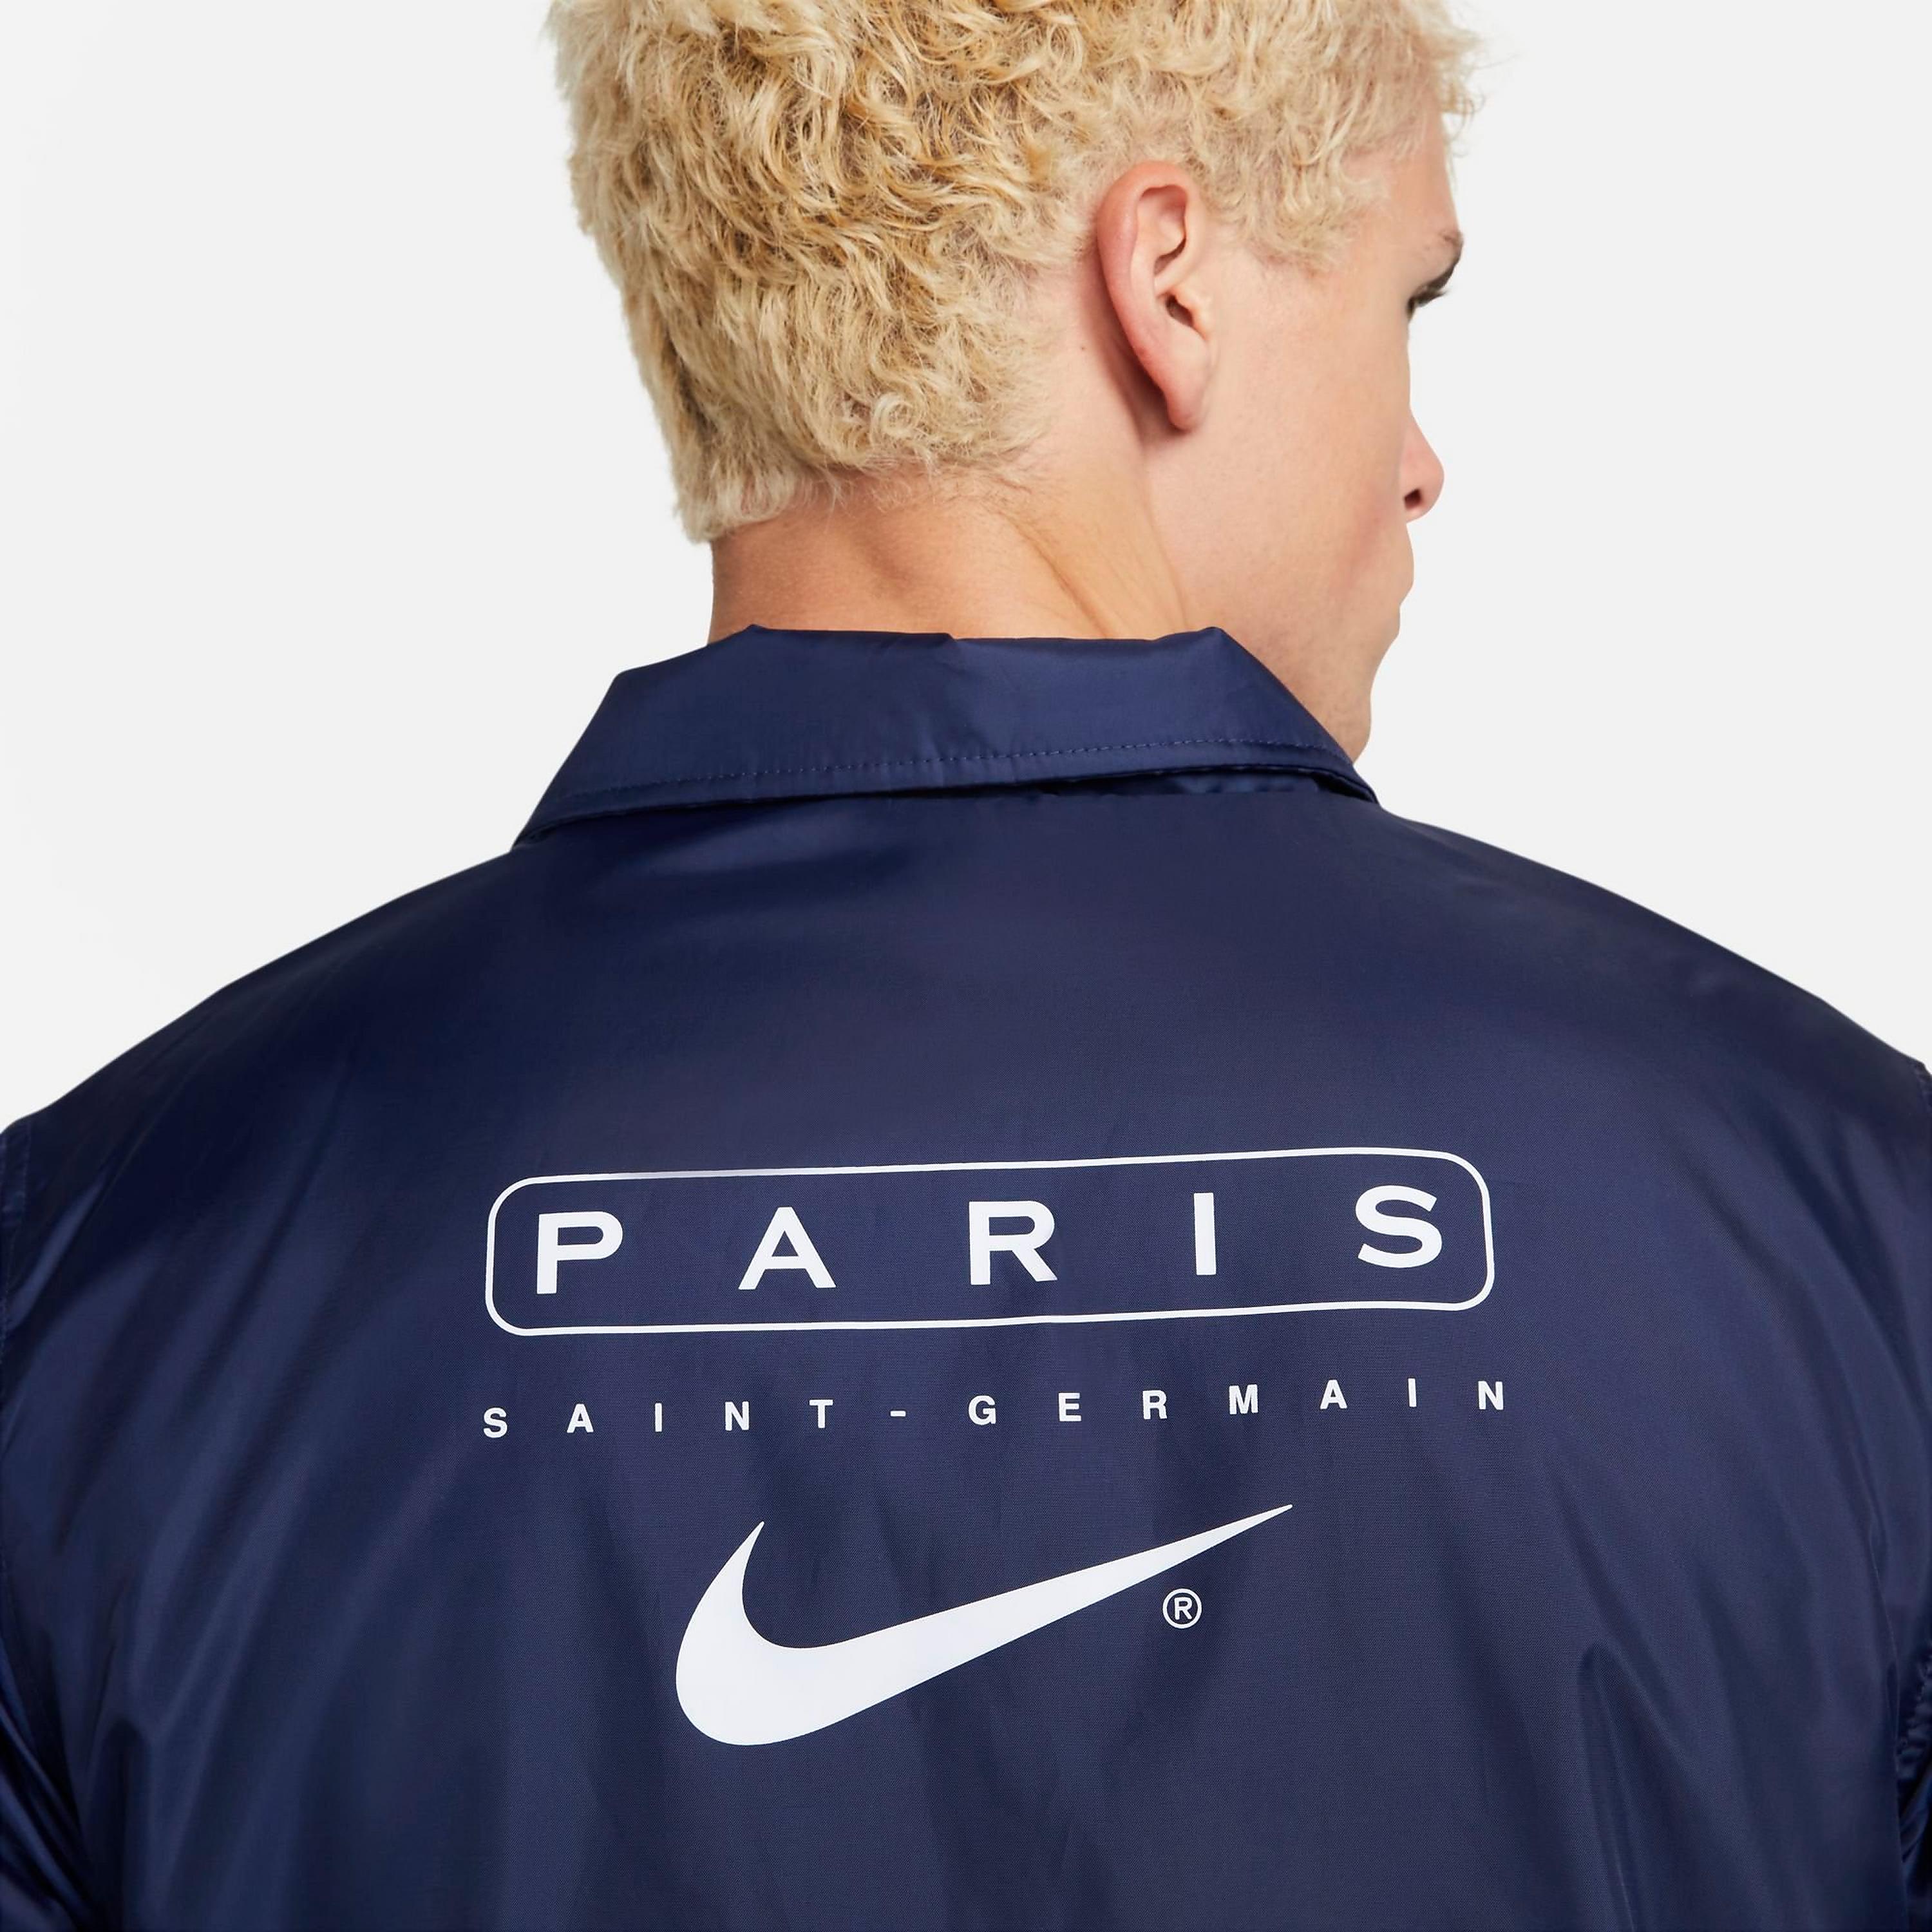 Жилет Nike Paris Saint-Germain. Найк париж